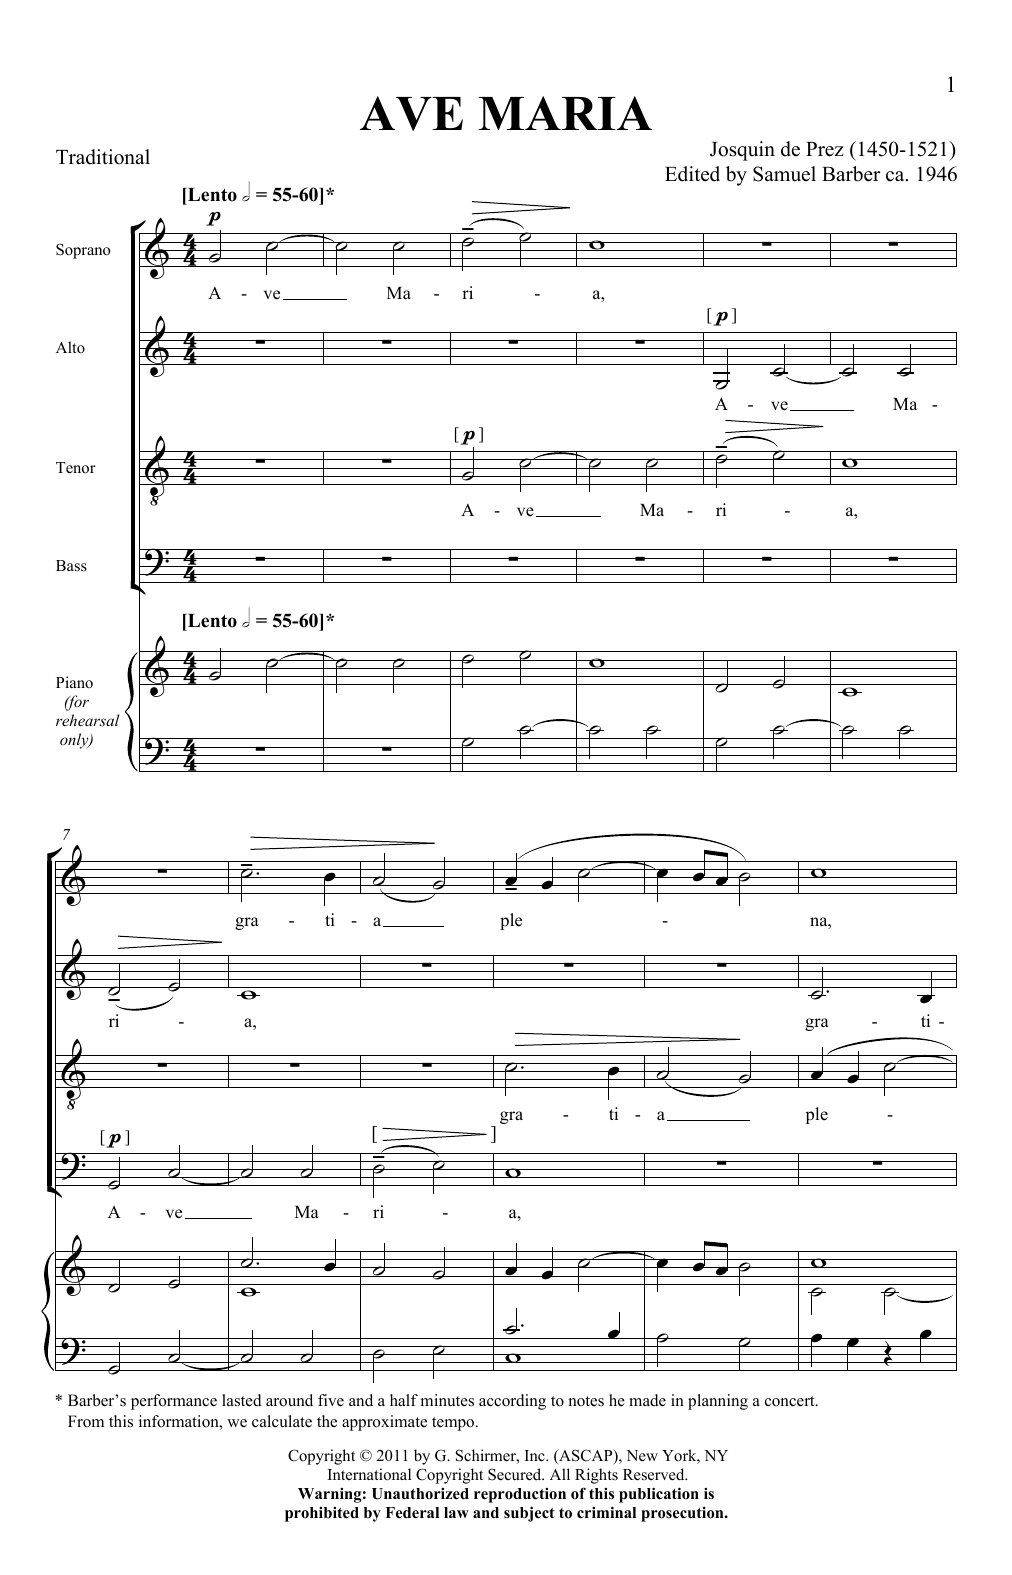 Josquin de Prez Ave Maria (ed. Samuel Barber) Sheet Music Notes & Chords for SATB Choir - Download or Print PDF